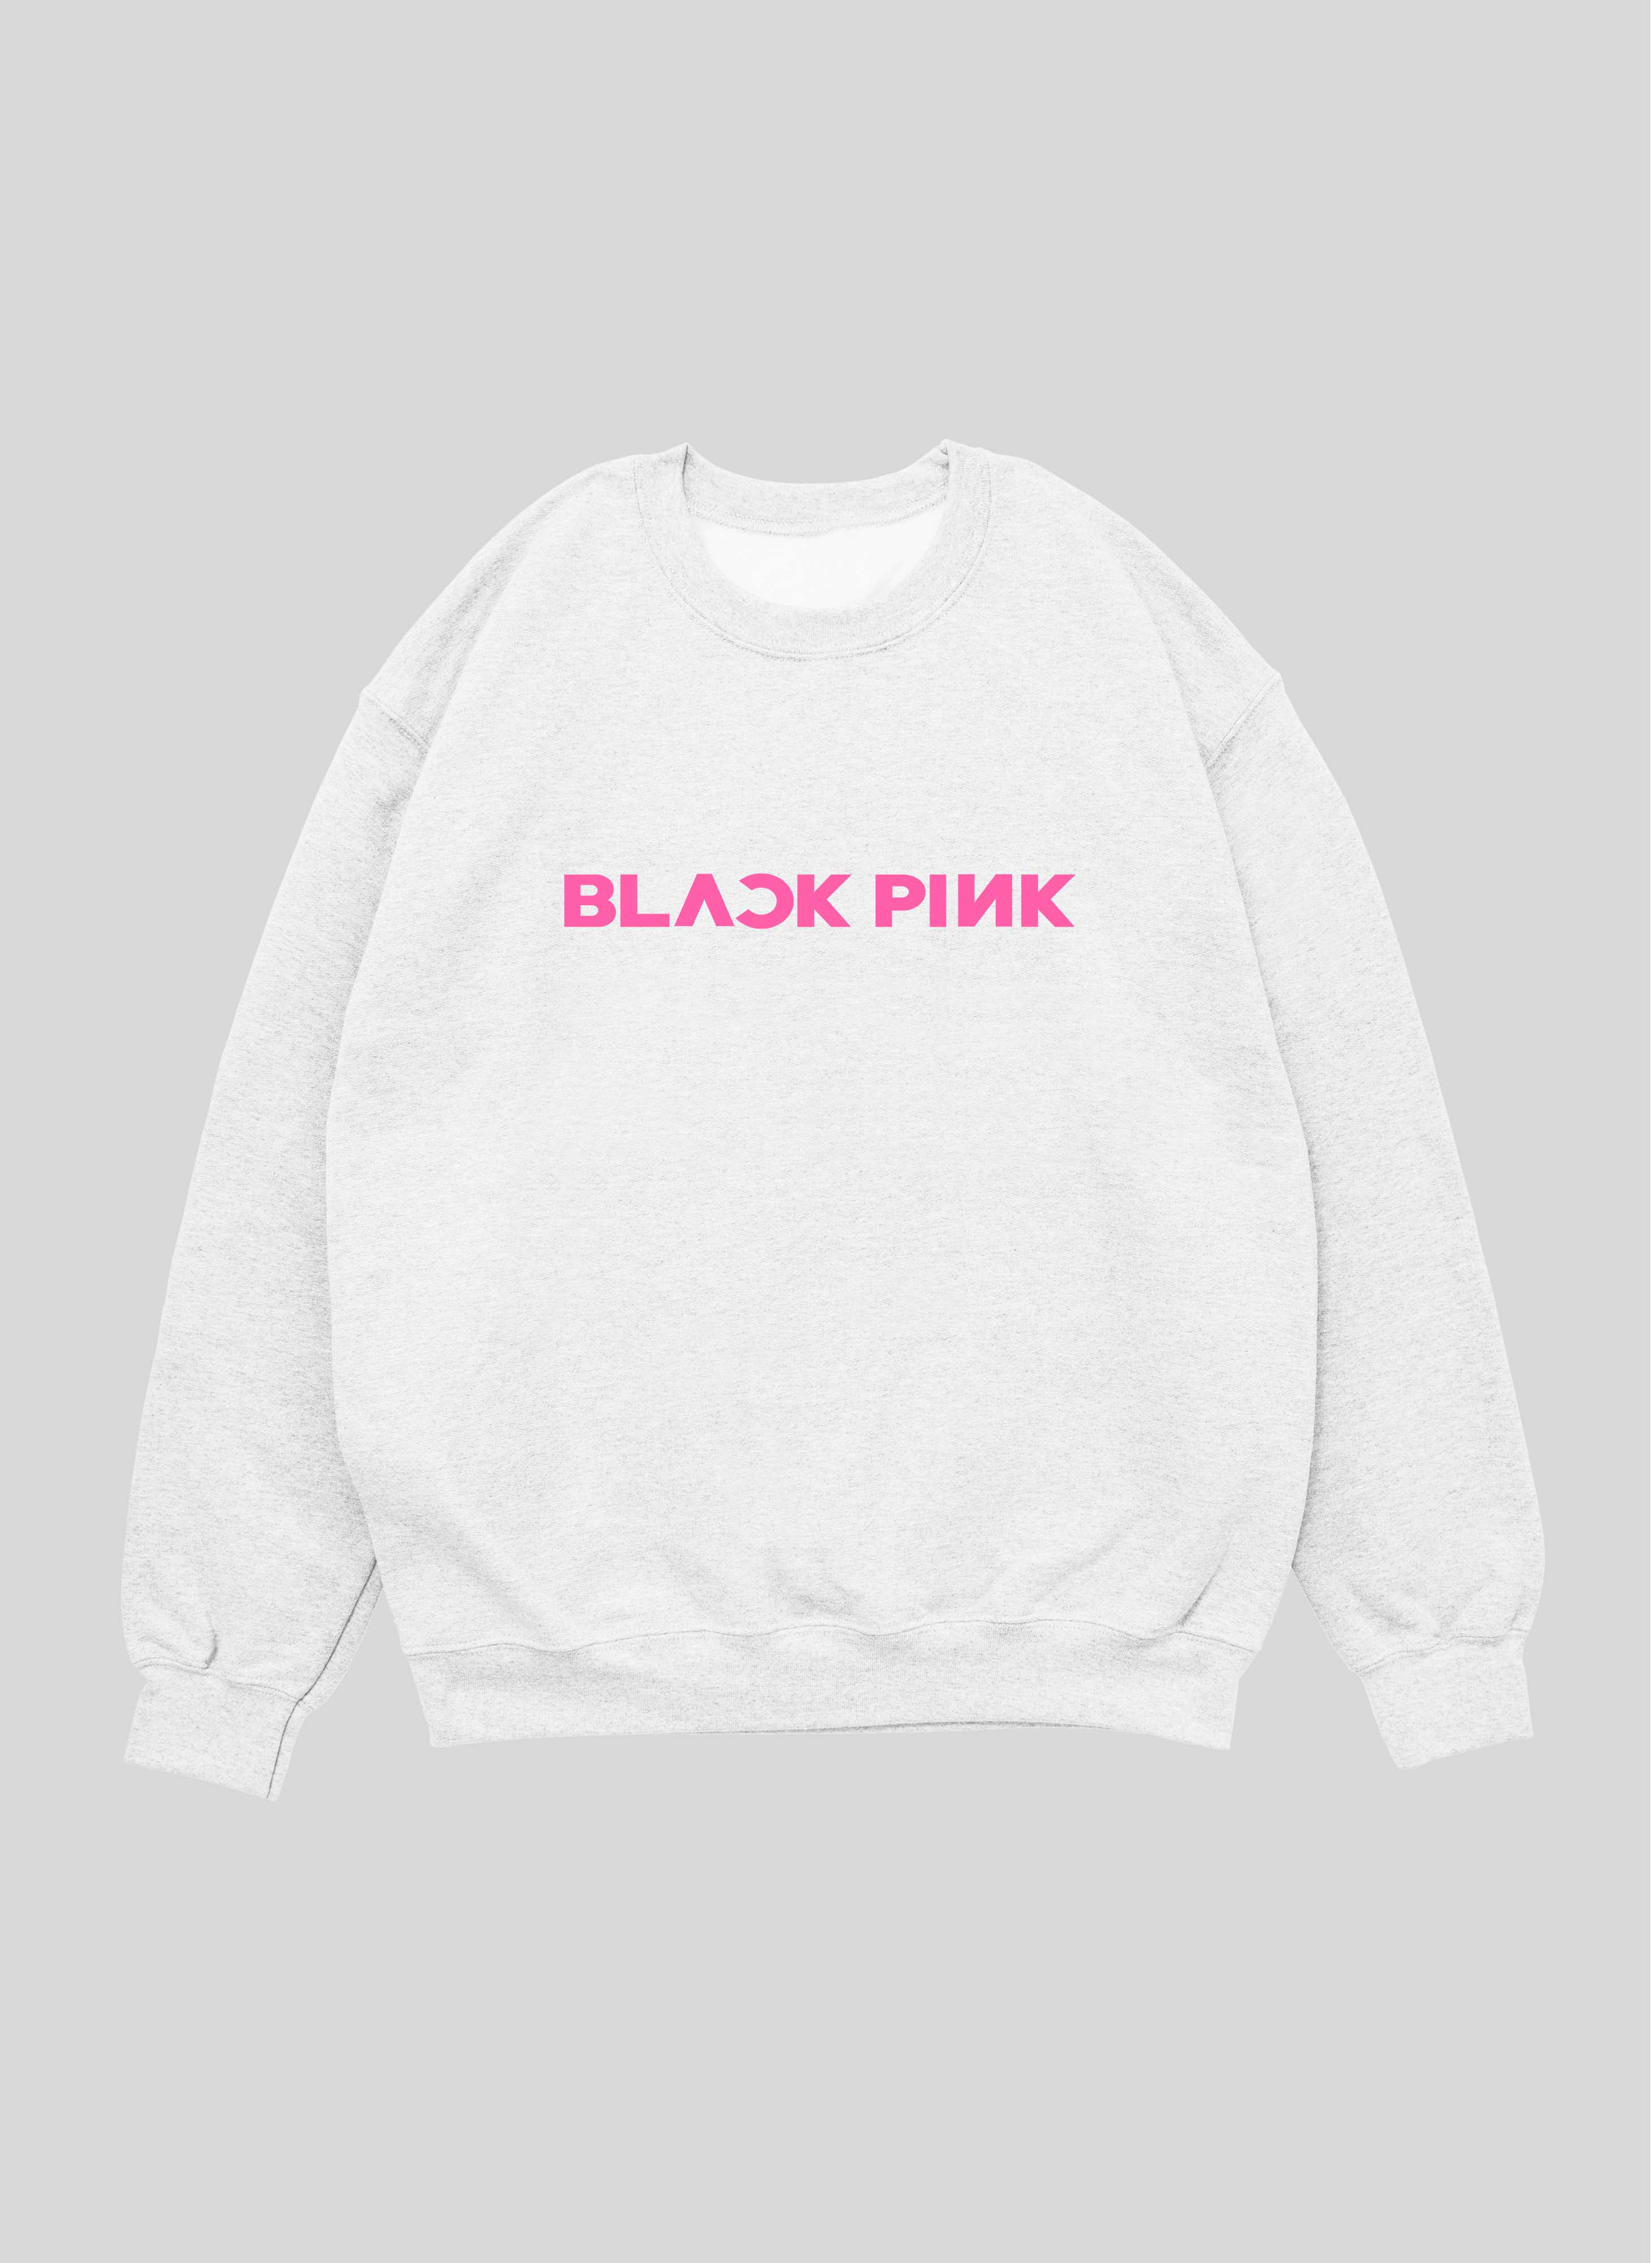 BLACKPINK F&B White Unisex Sweatshirt | Sale